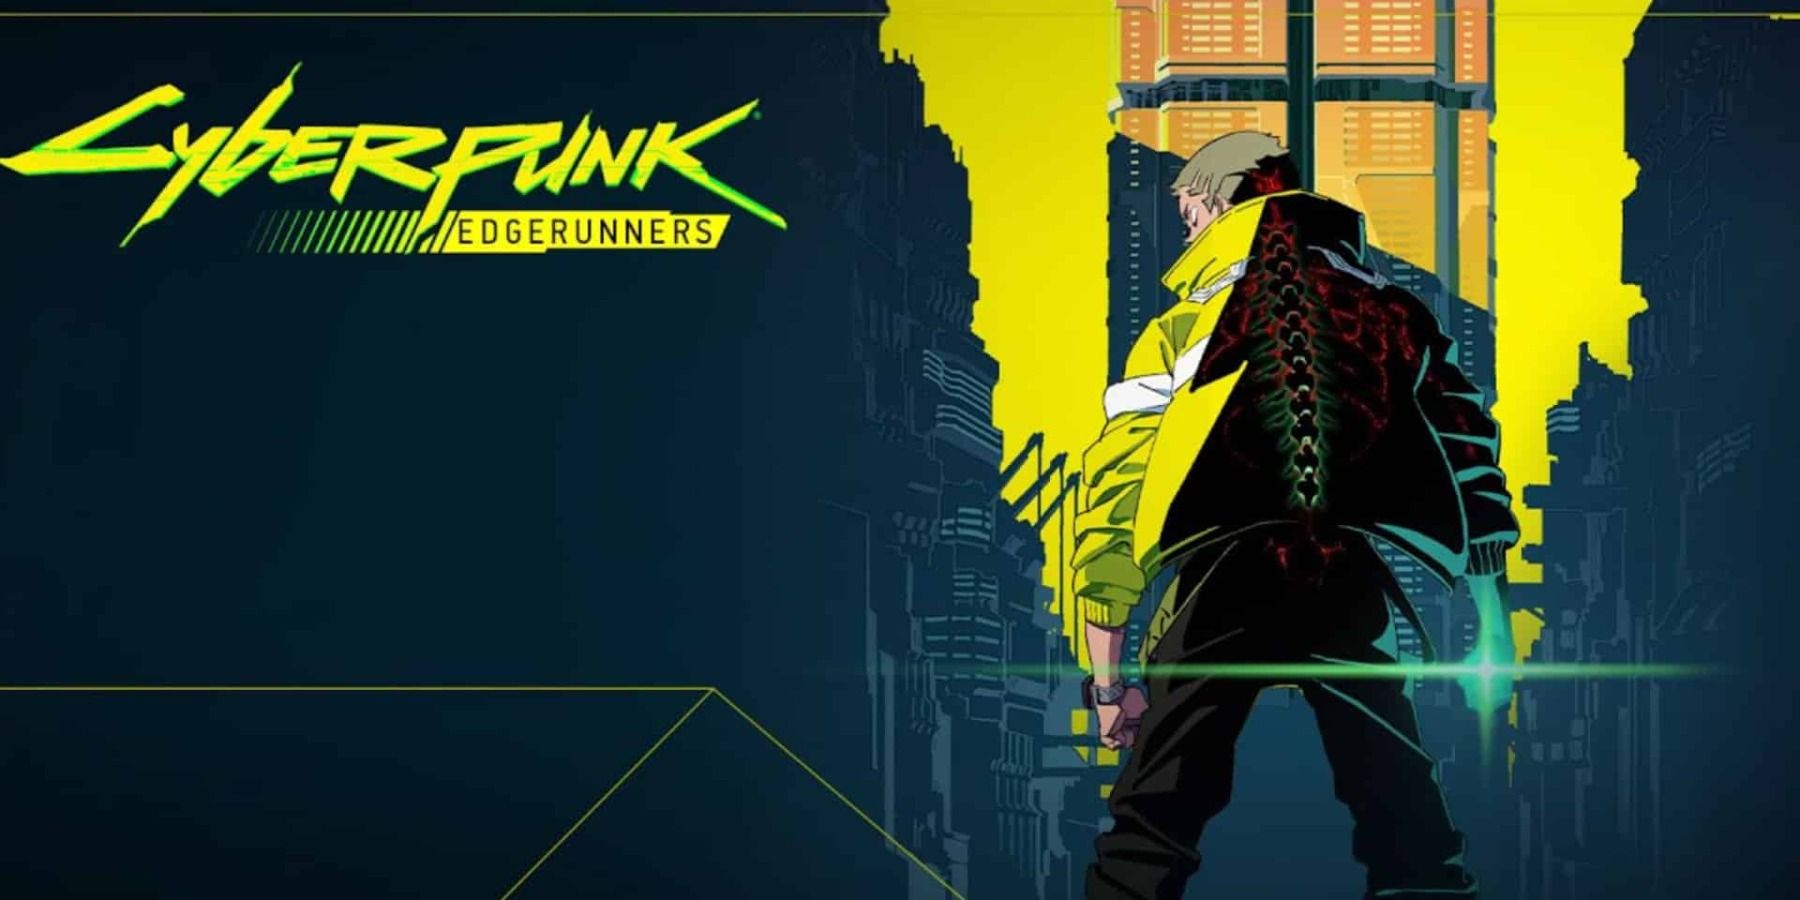 Cyberpunk Edgerunners promo for Netflix featuring the protagonist